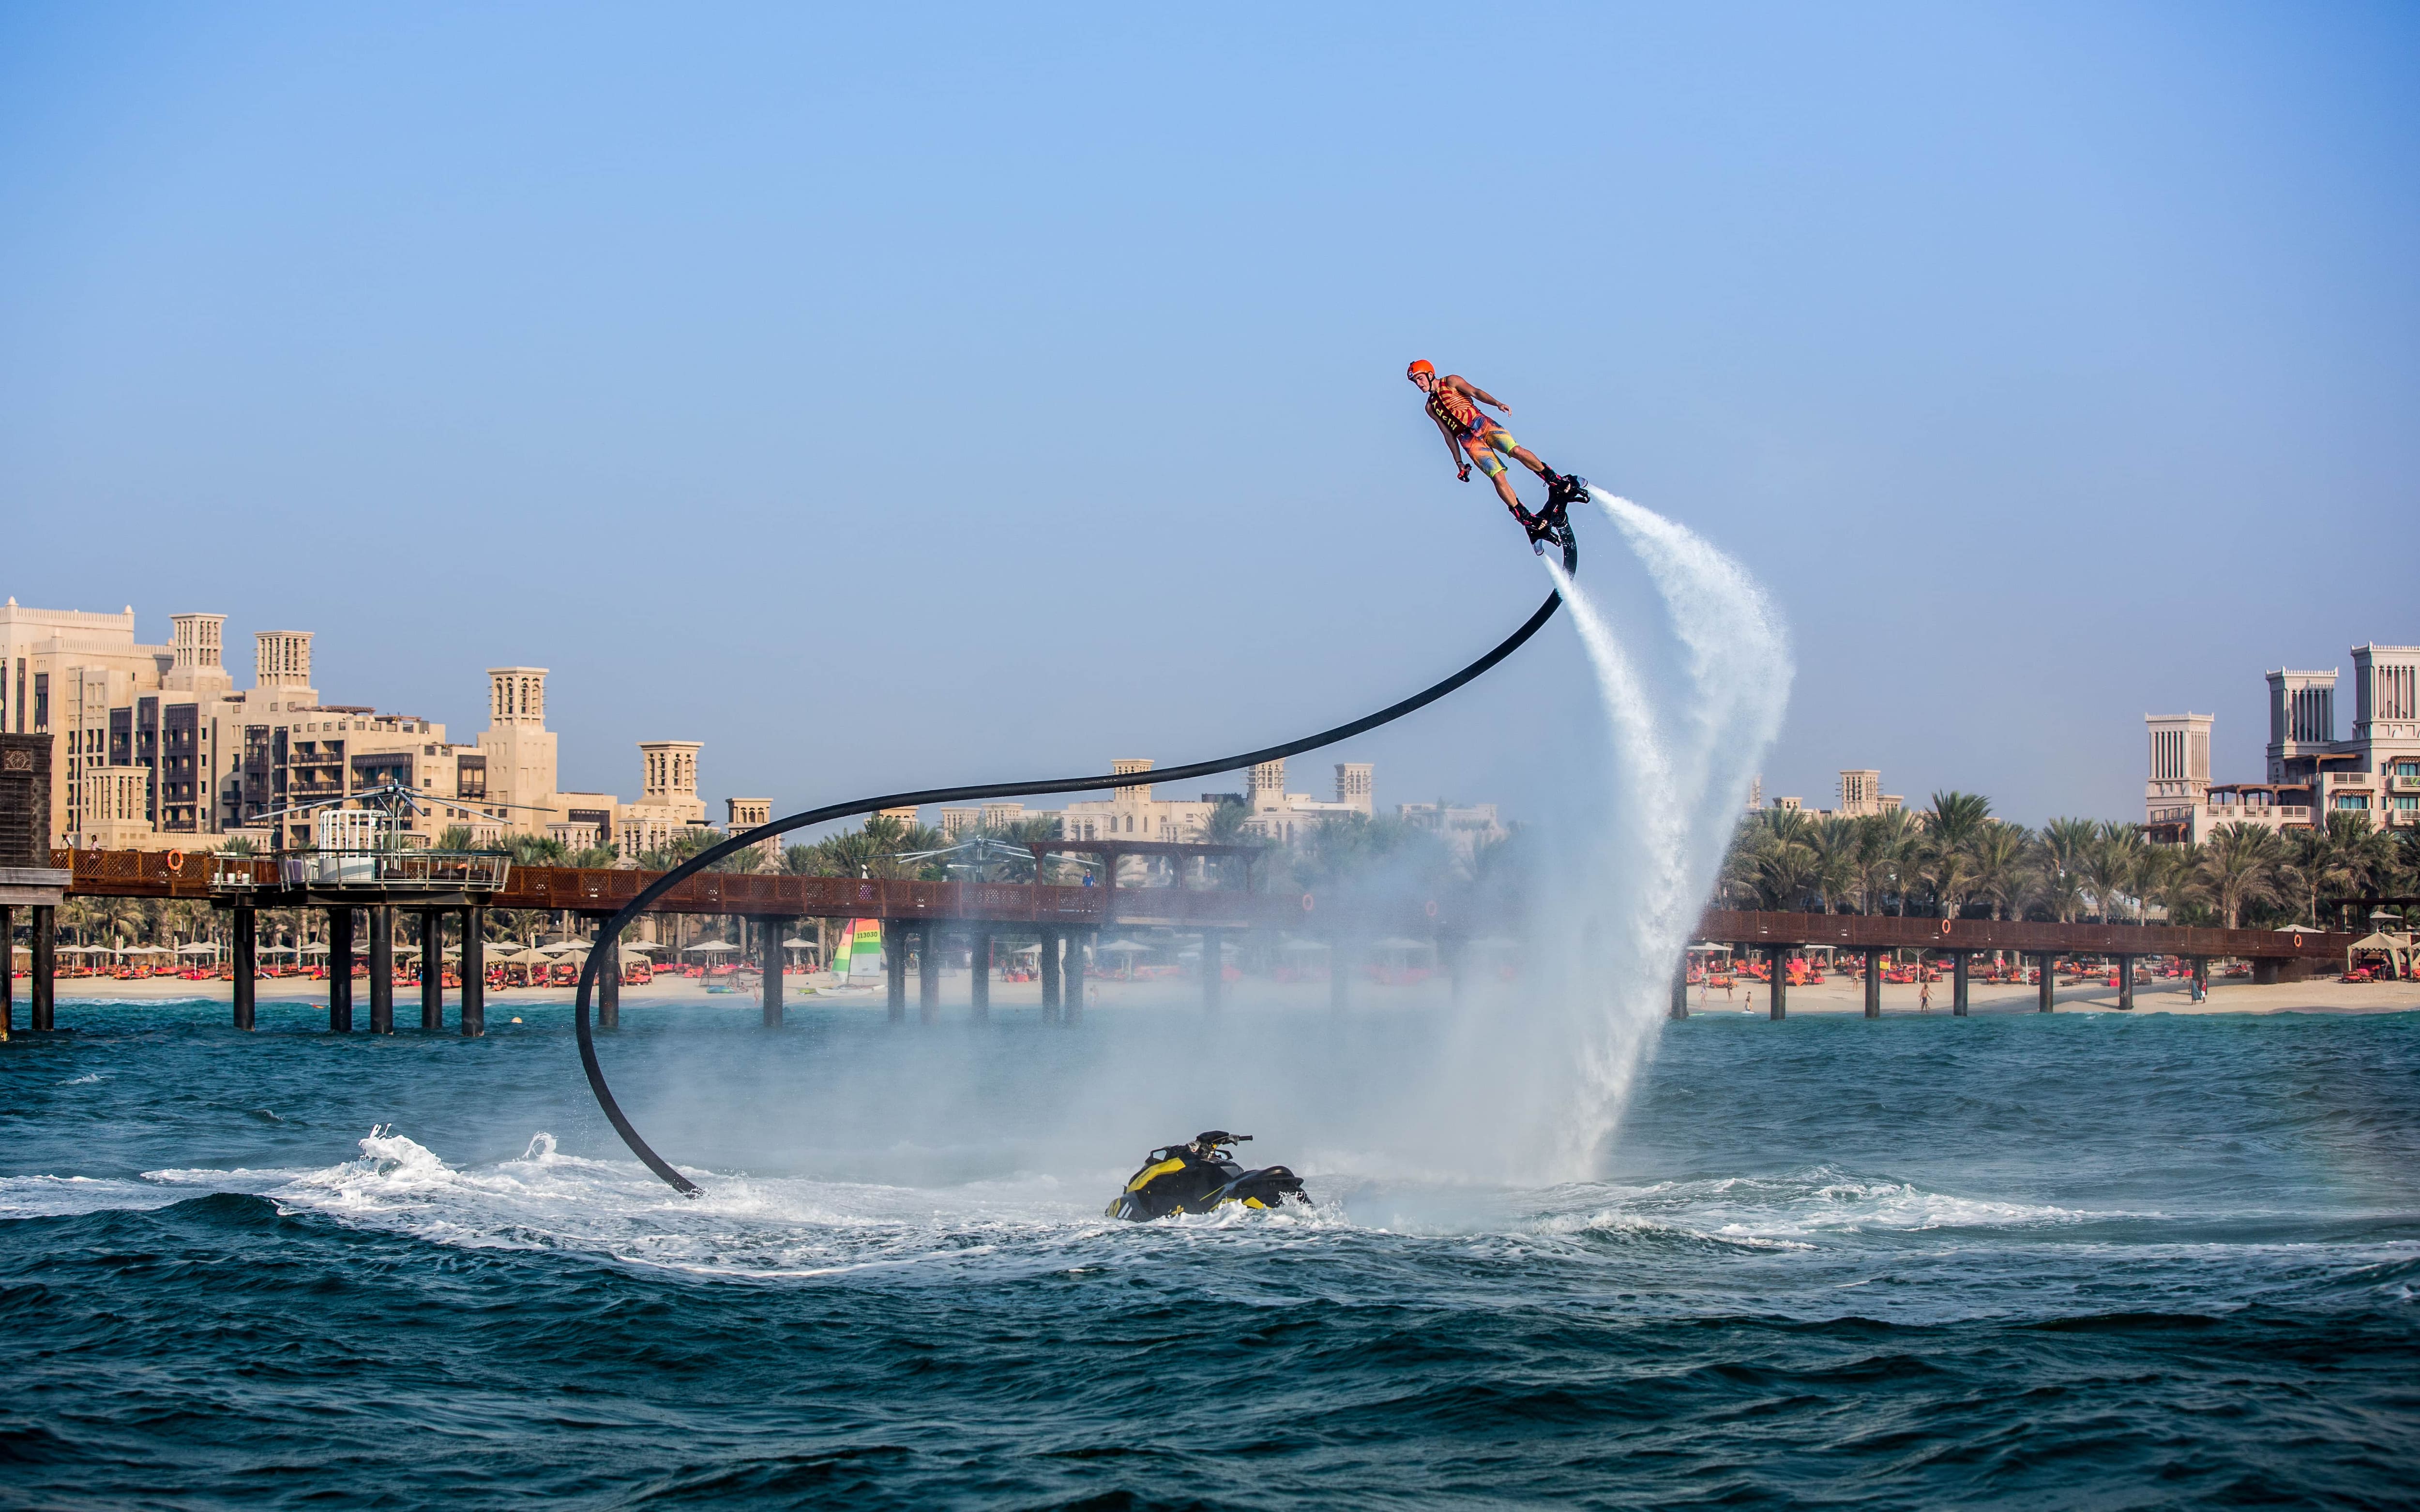 Dubai Water Sports: 30-minute Water Jetpack Dubai Experience